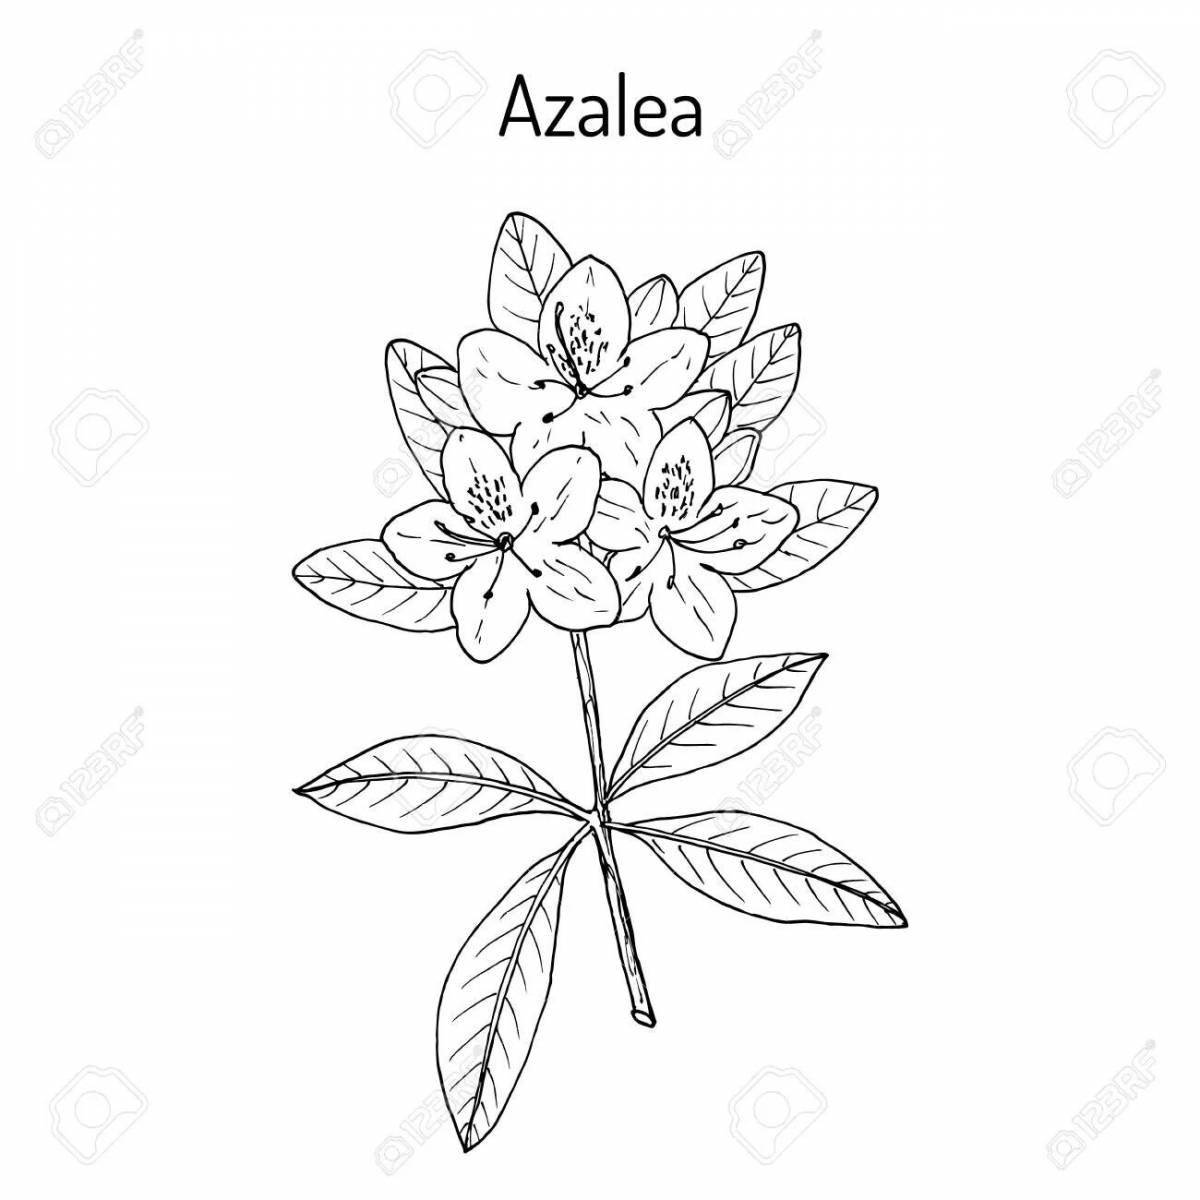 Colorful azalea coloring page